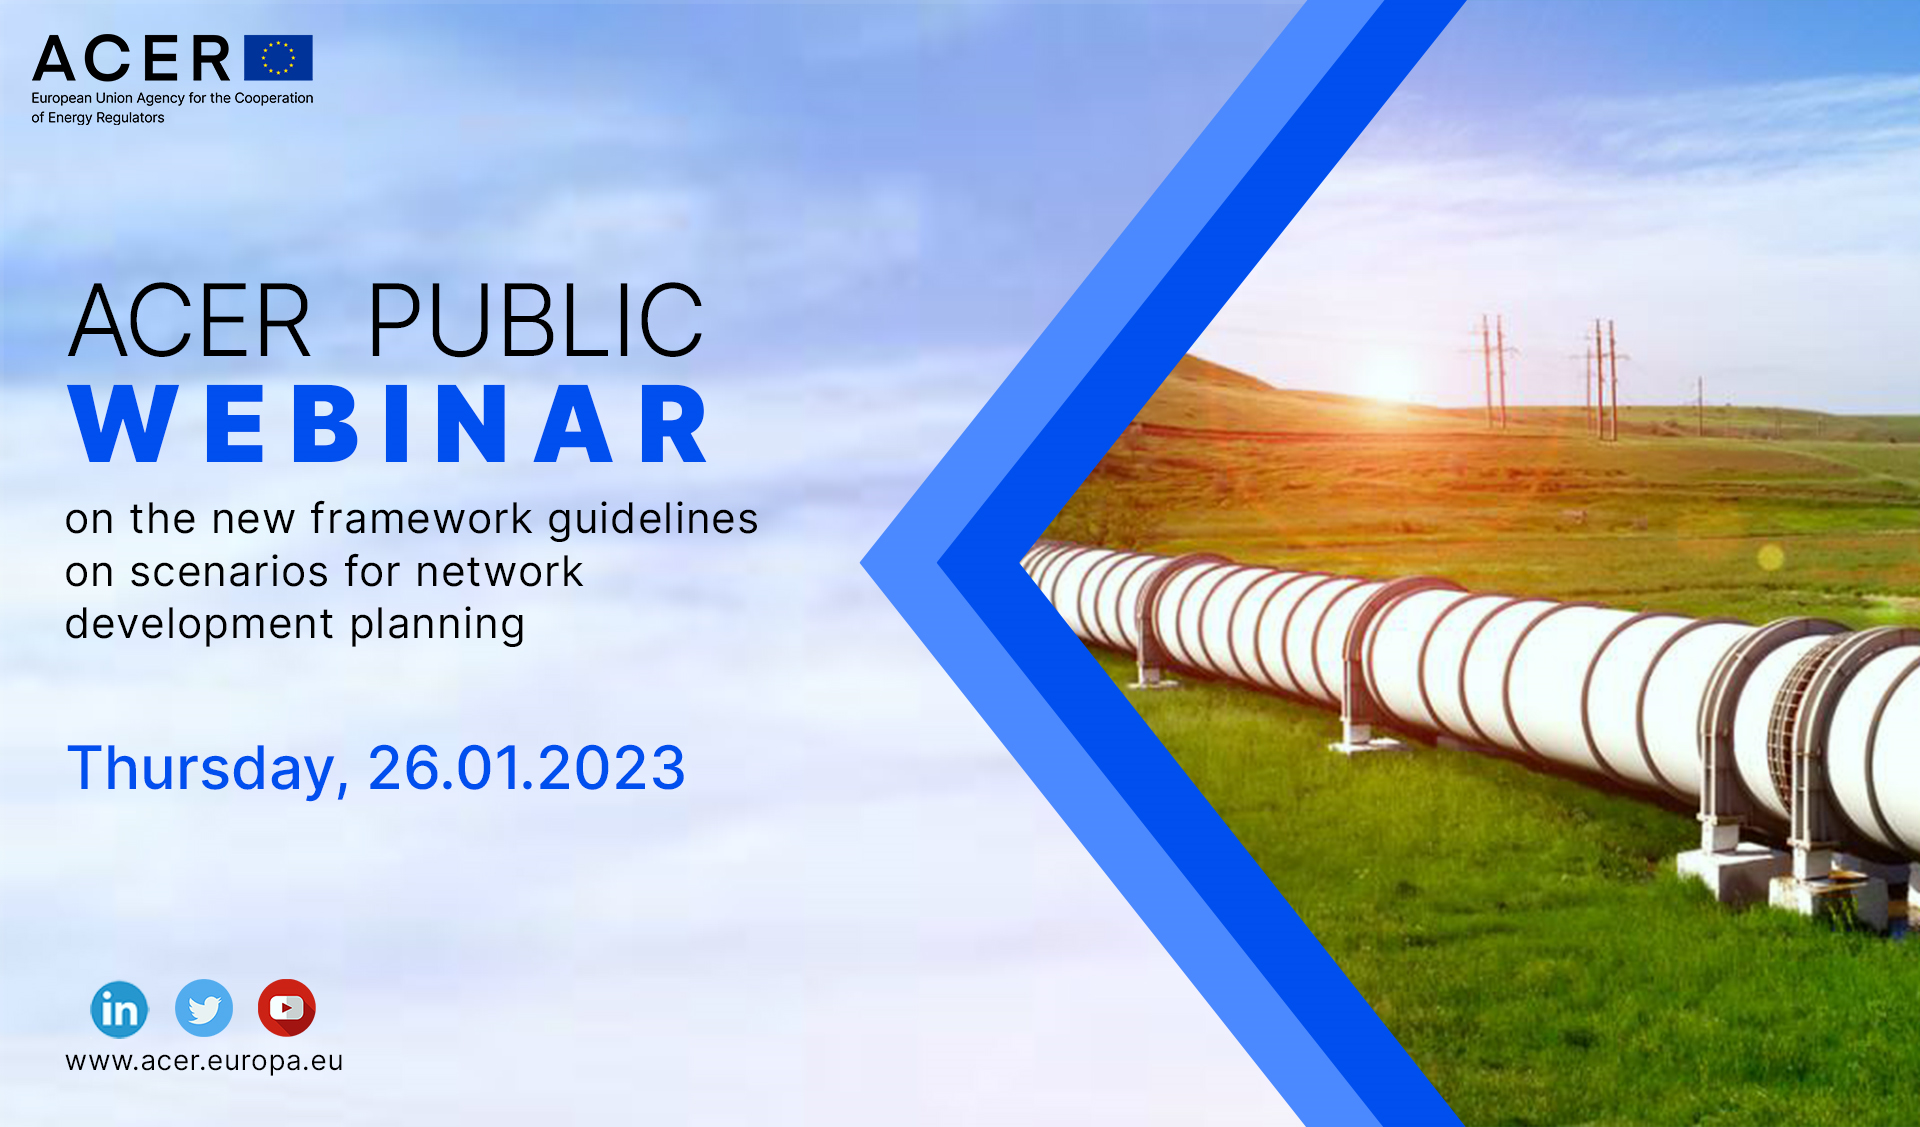 ACER Public Webinar on the new framework guidelines on scenarios for network development planning